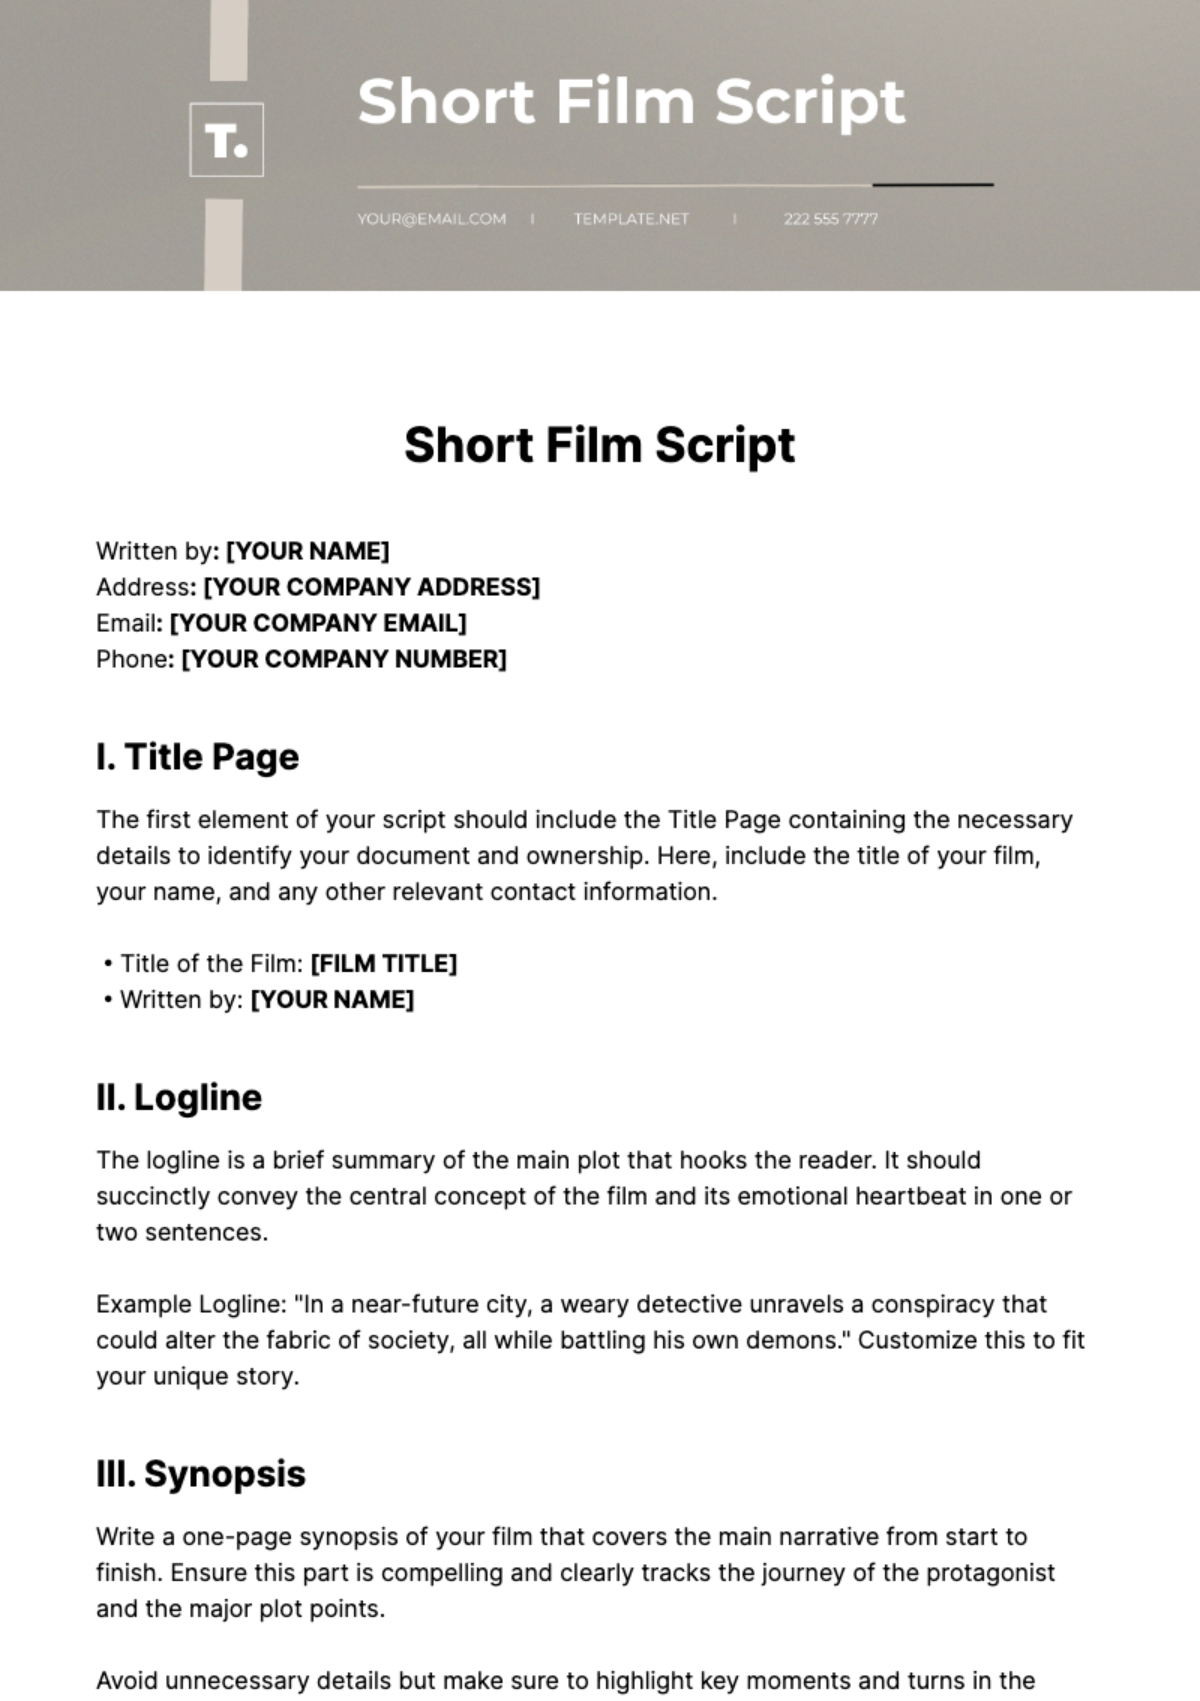 Short Film Script Template